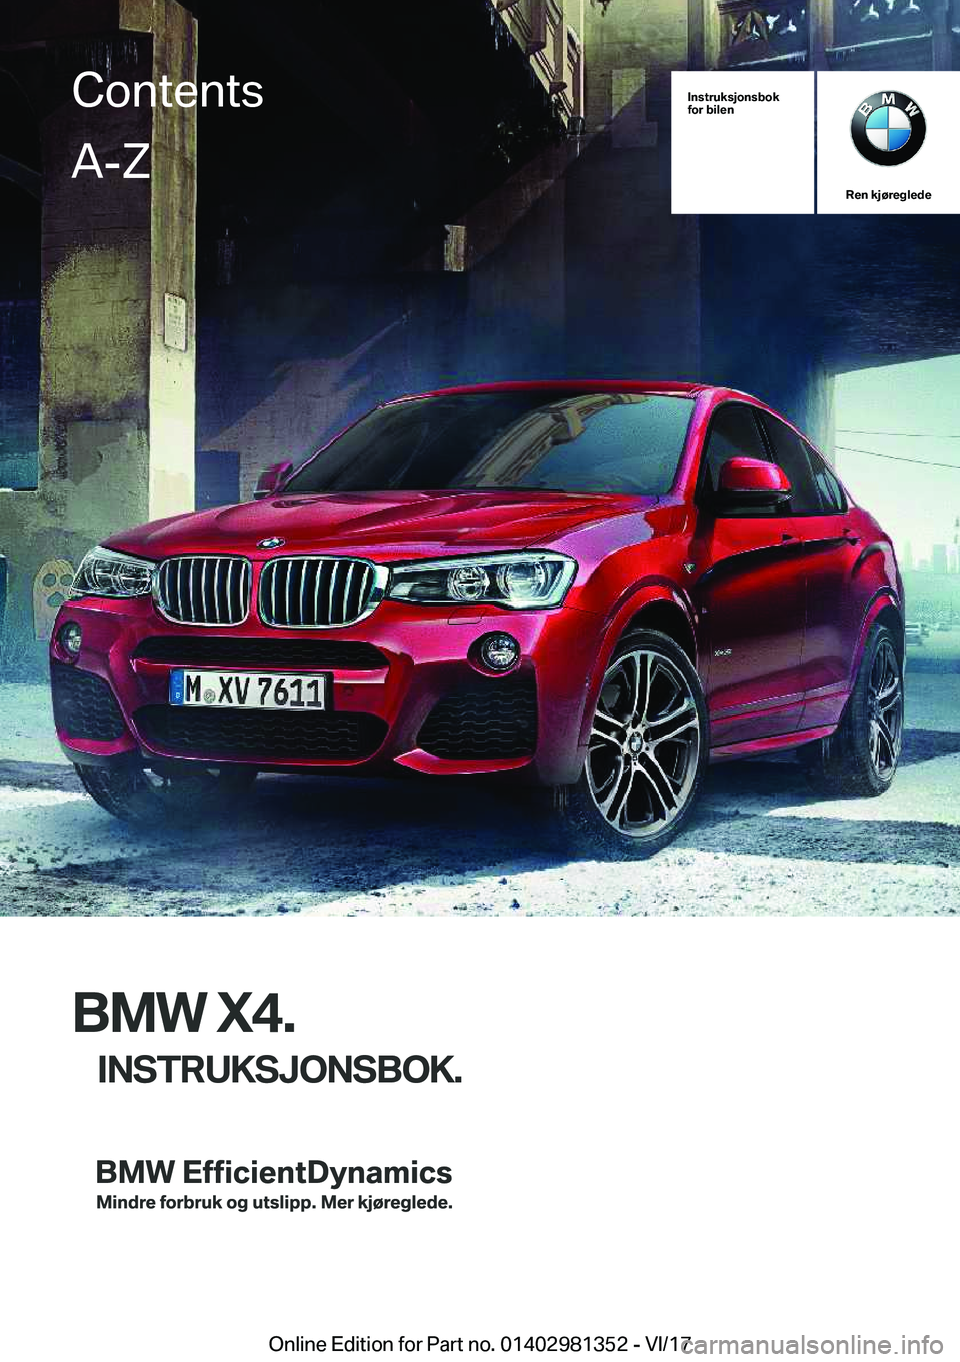 BMW X4 2018  InstruksjonsbØker (in Norwegian) �I�n�s�t�r�u�k�s�j�o�n�s�b�o�k
�f�o�r��b�i�l�e�n
�R�e�n��k�j�